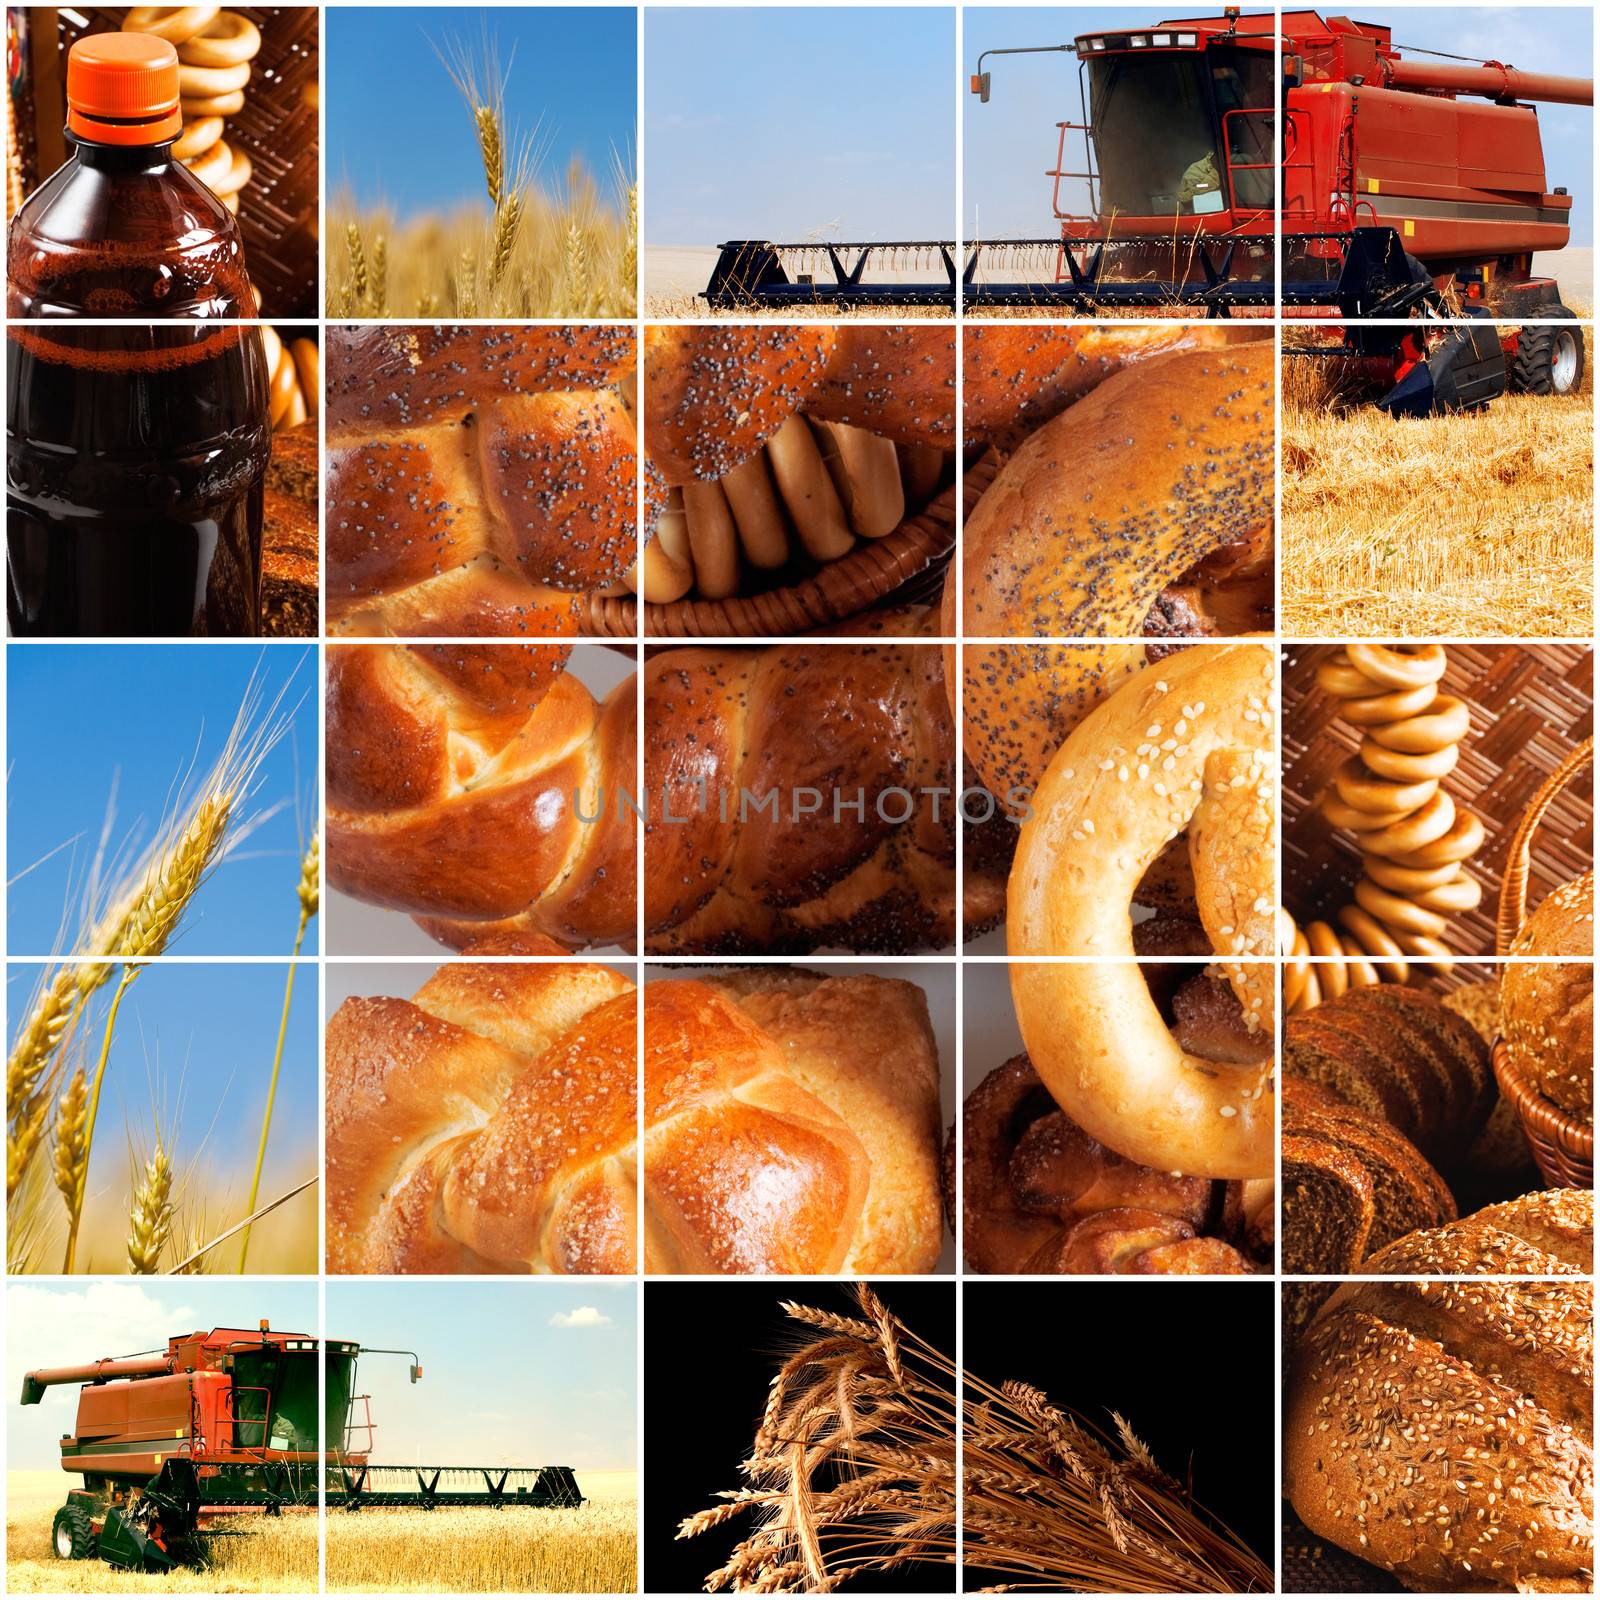 harvesting of grain crops in late summer by Serp